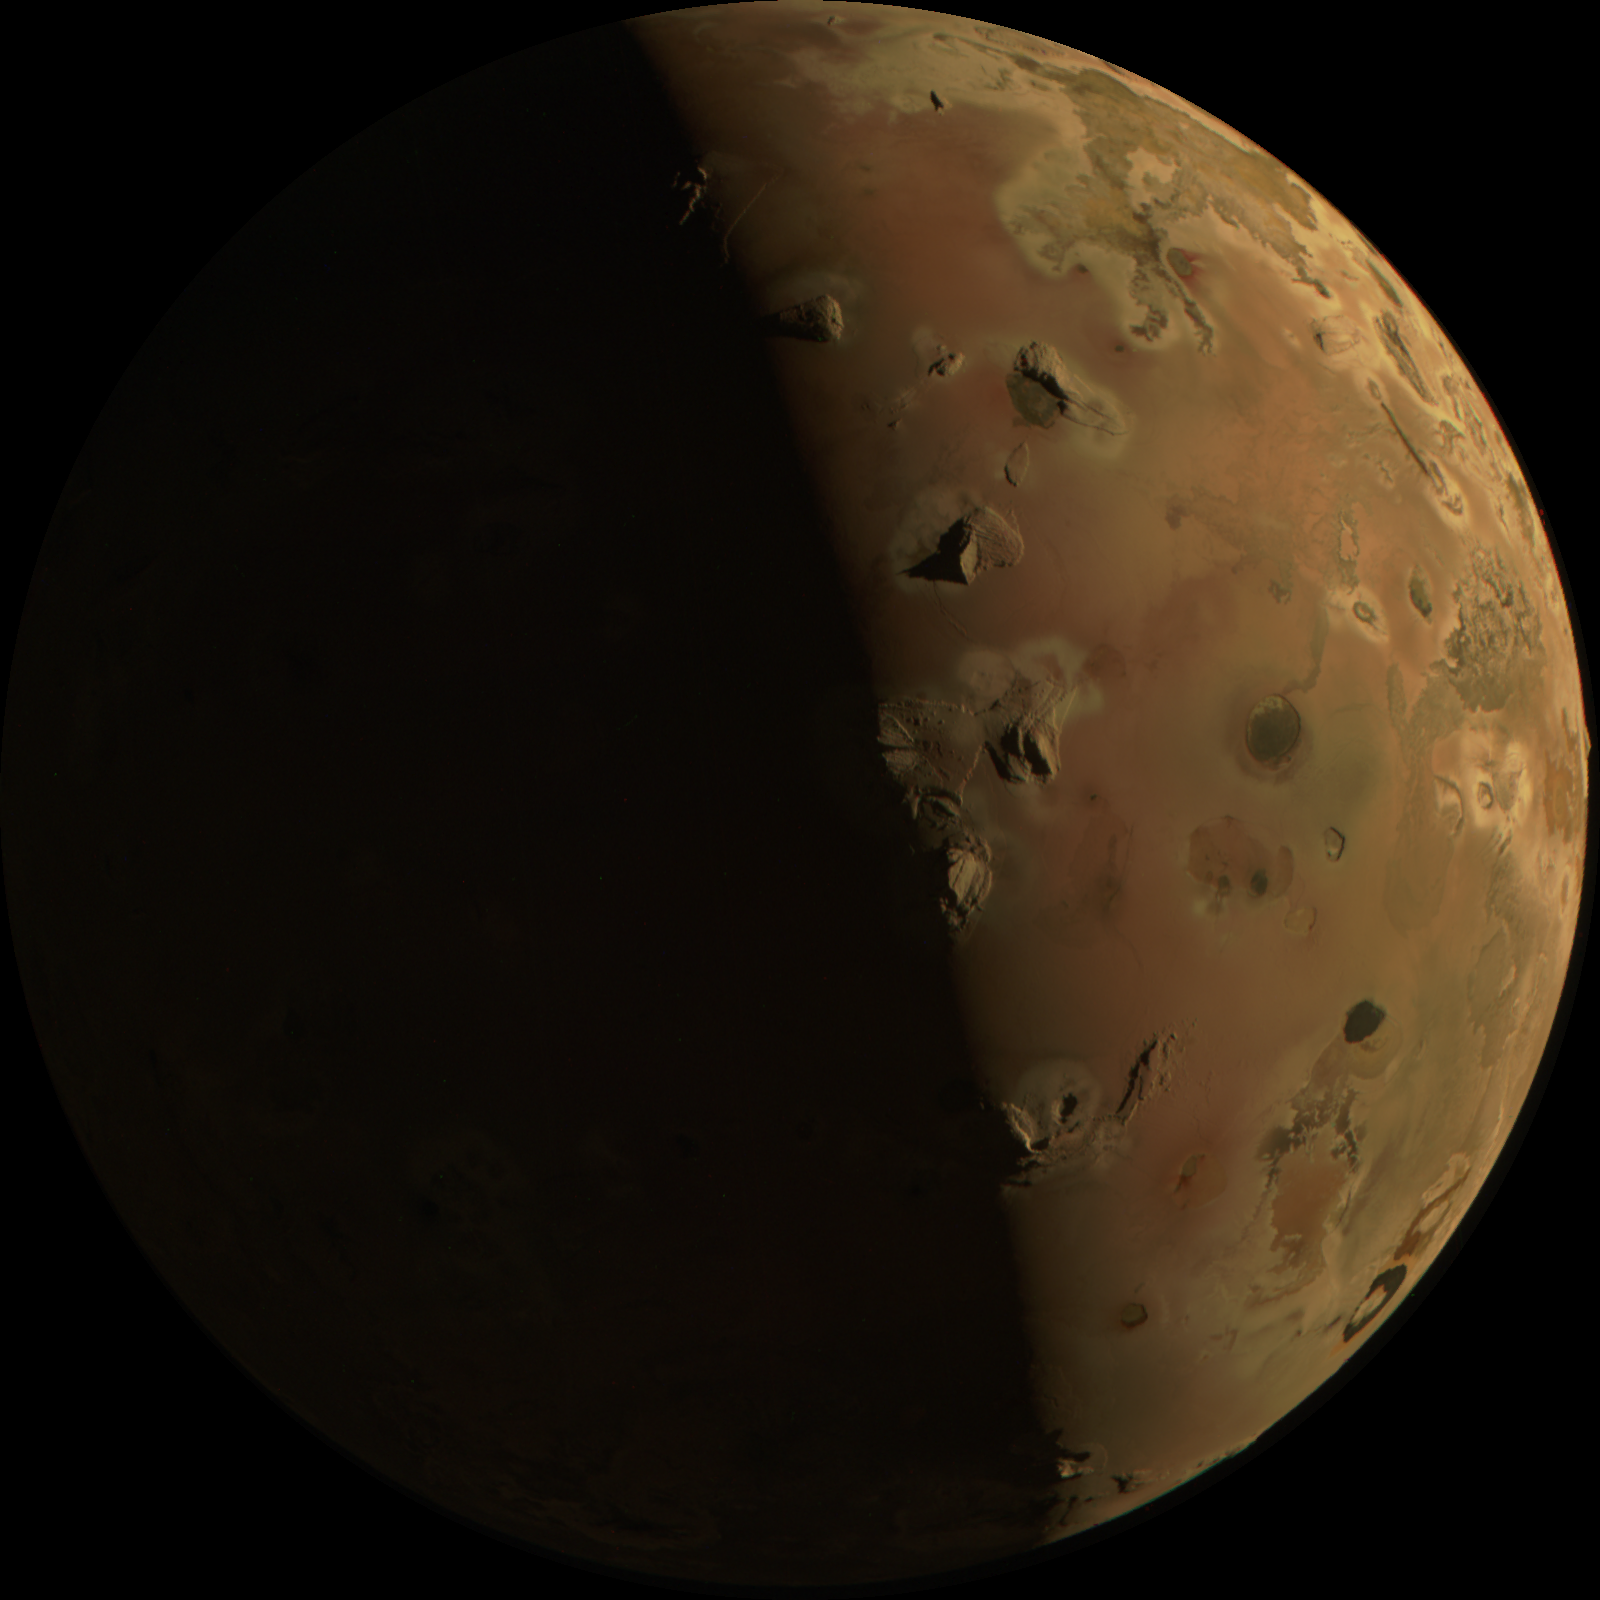 Jupiter's satellite Io